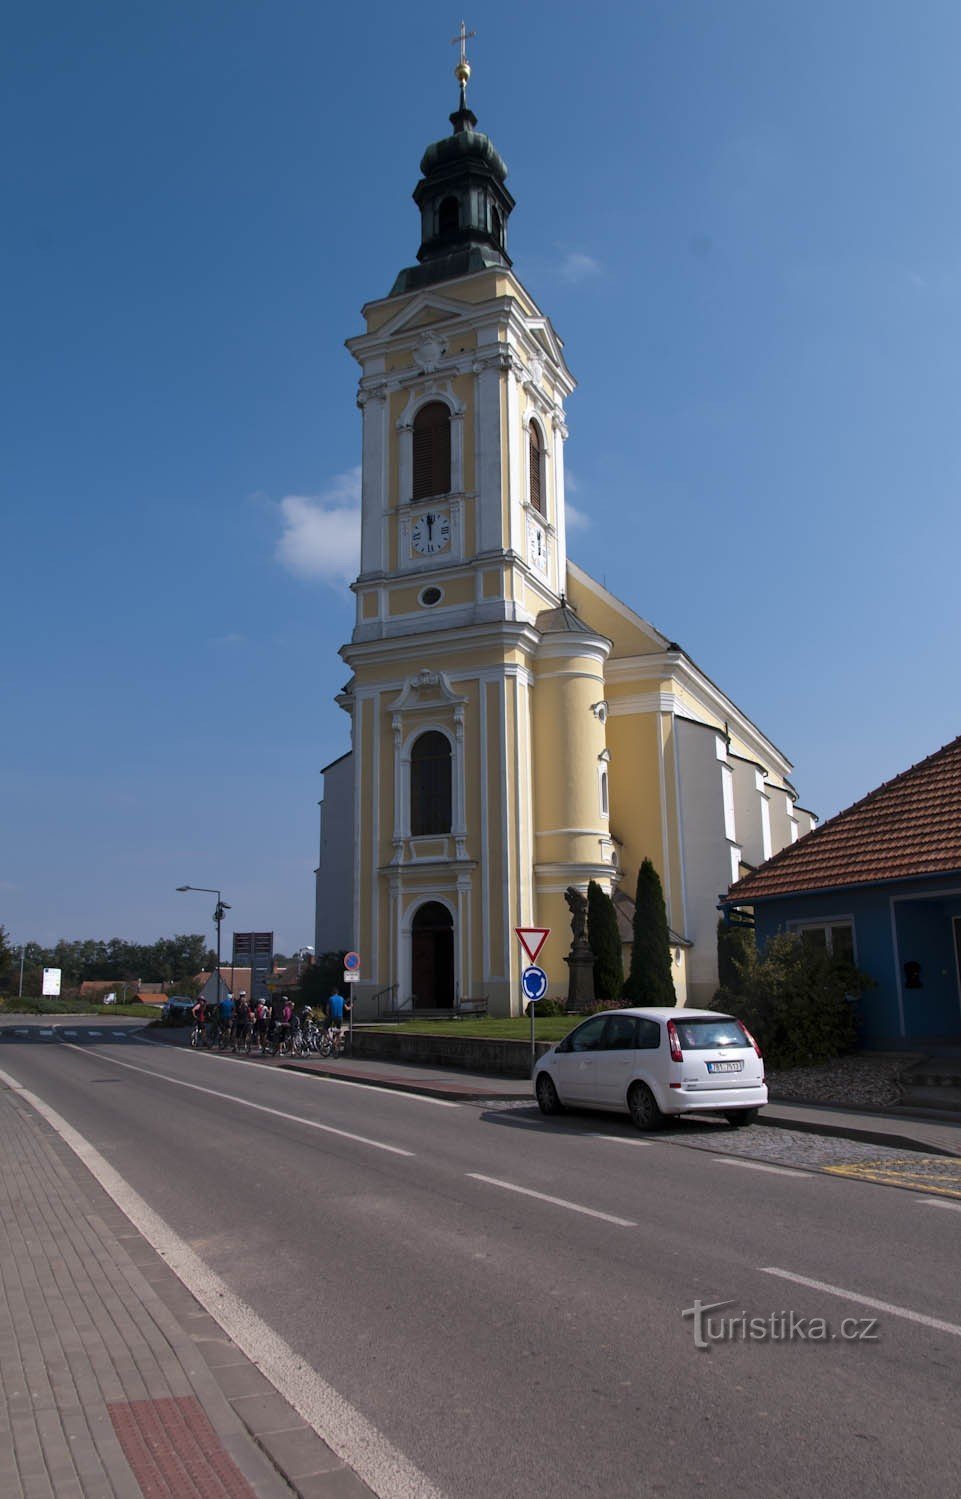 Церковь в Чейковицах